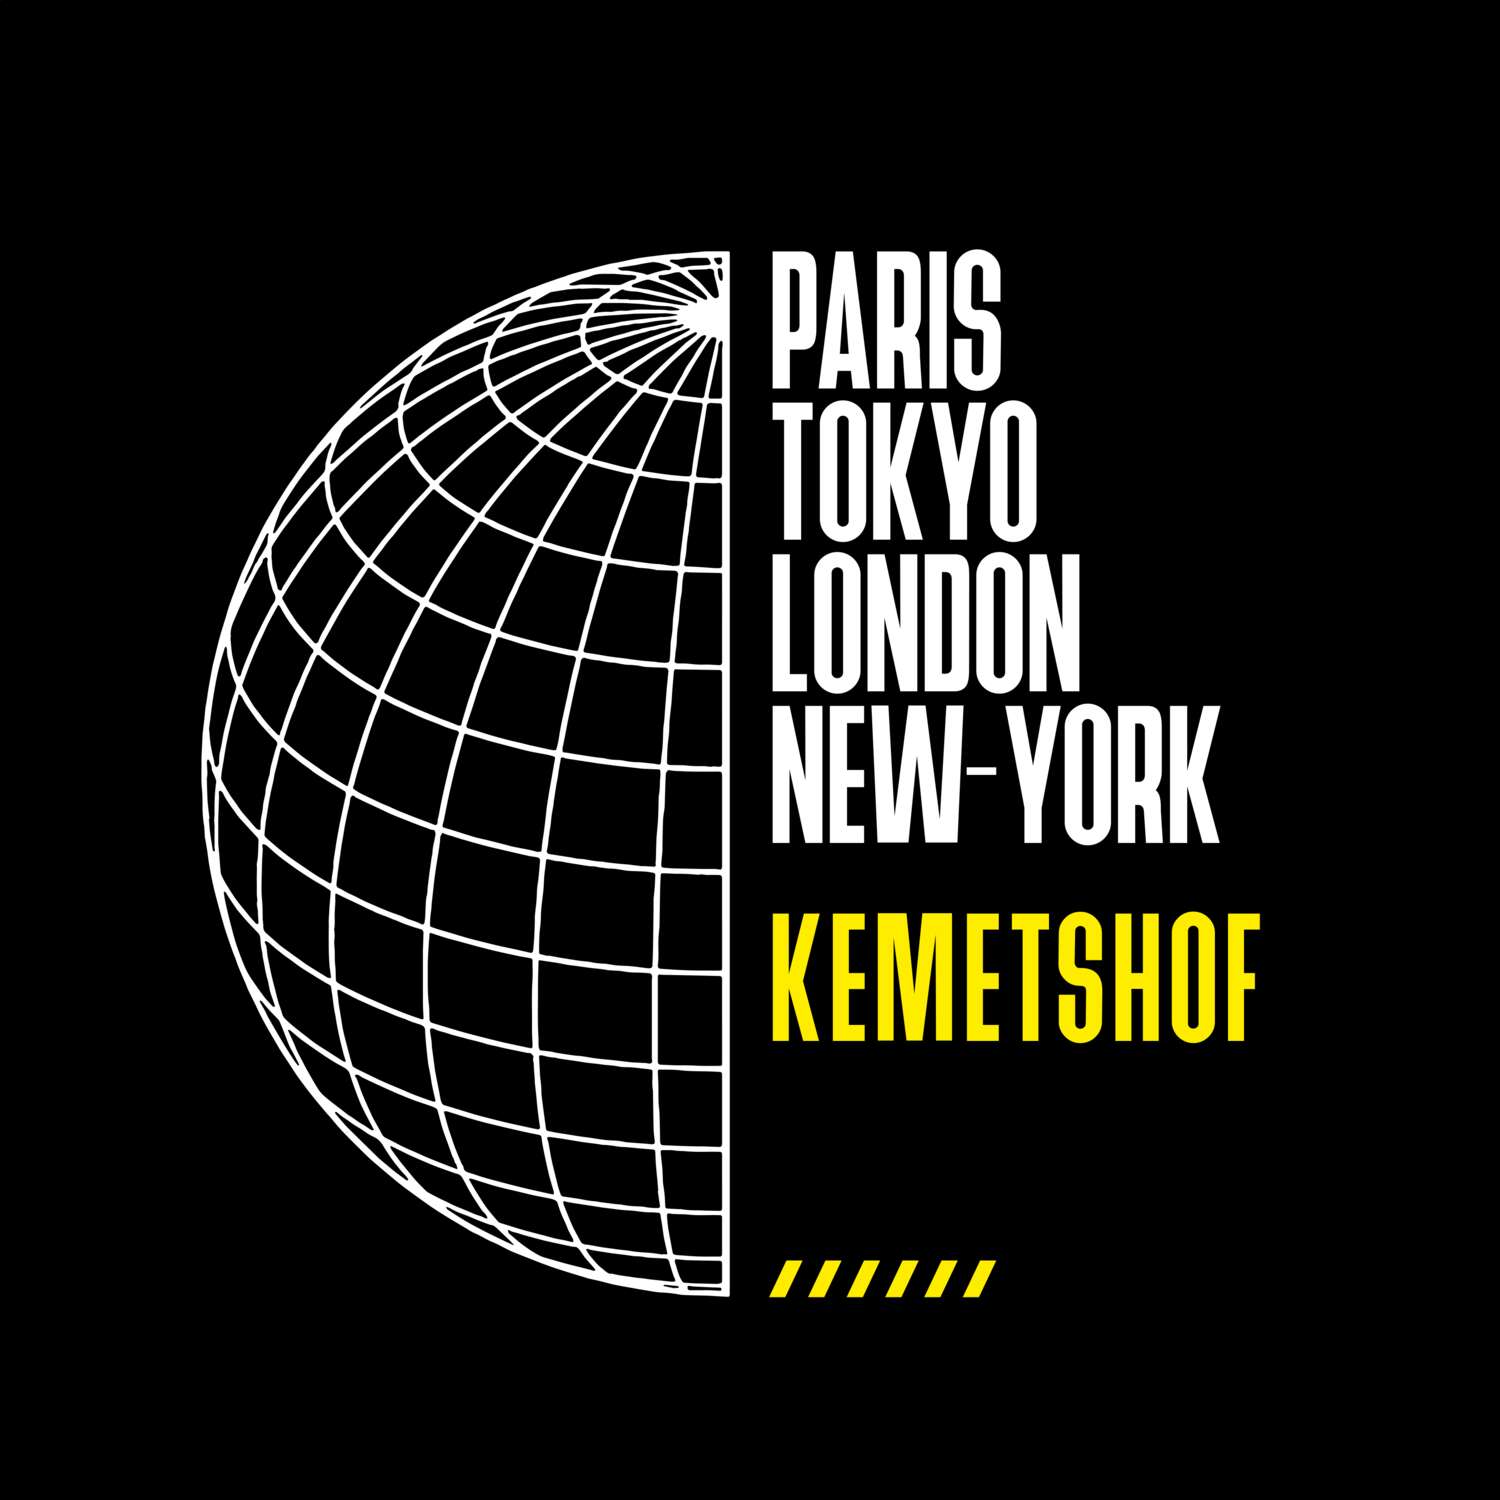 Kemetshof T-Shirt »Paris Tokyo London«